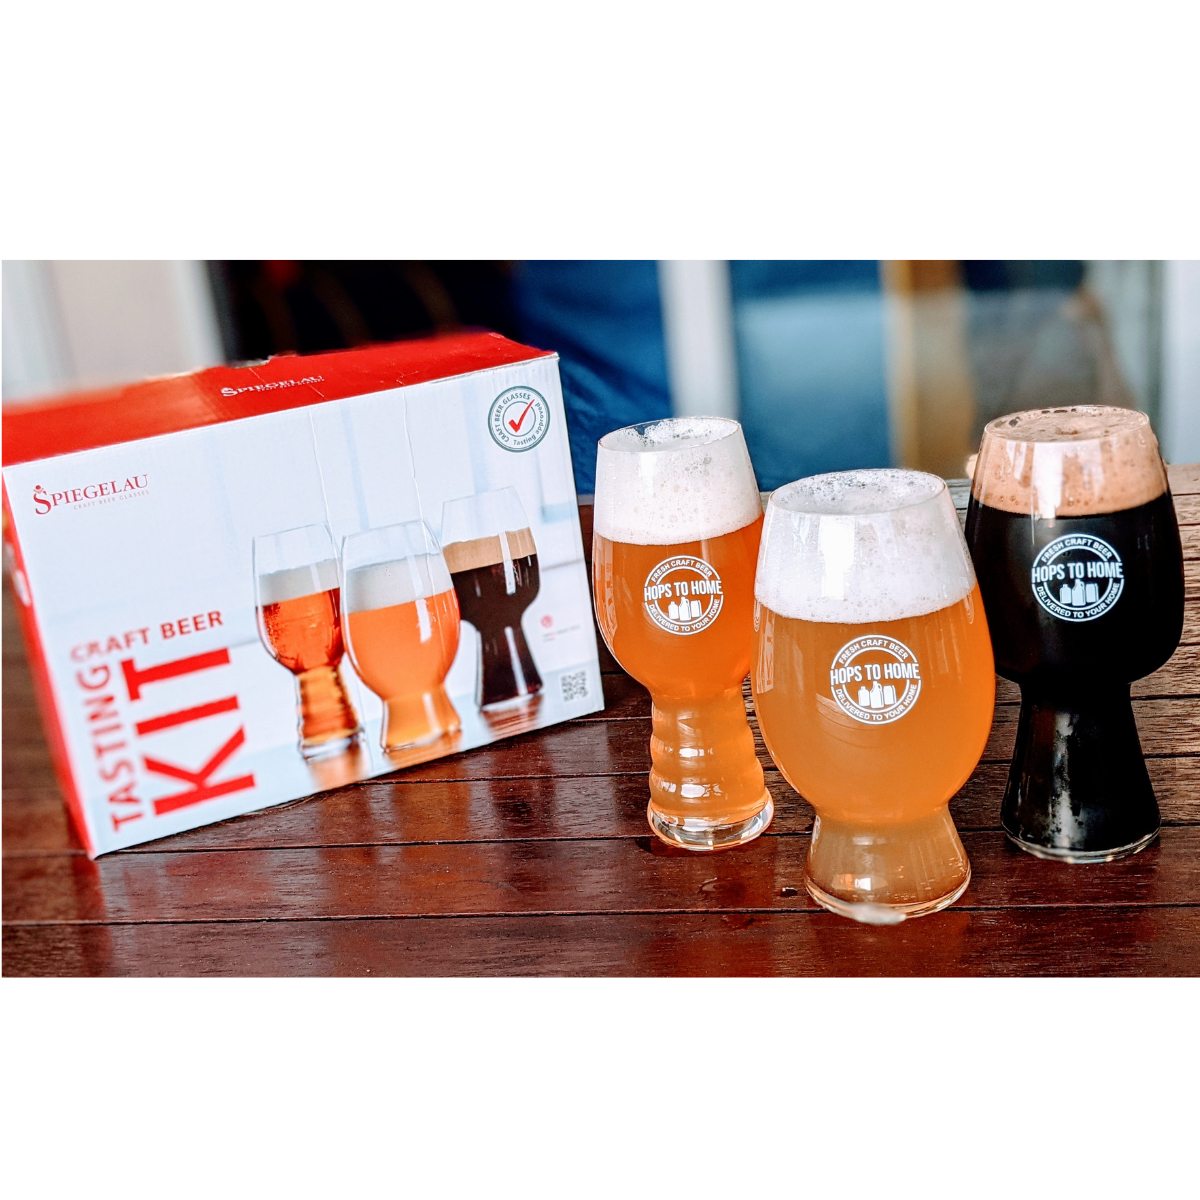 Hops To Home X Spiegelau Craft Beer Tasting Kit Glassware